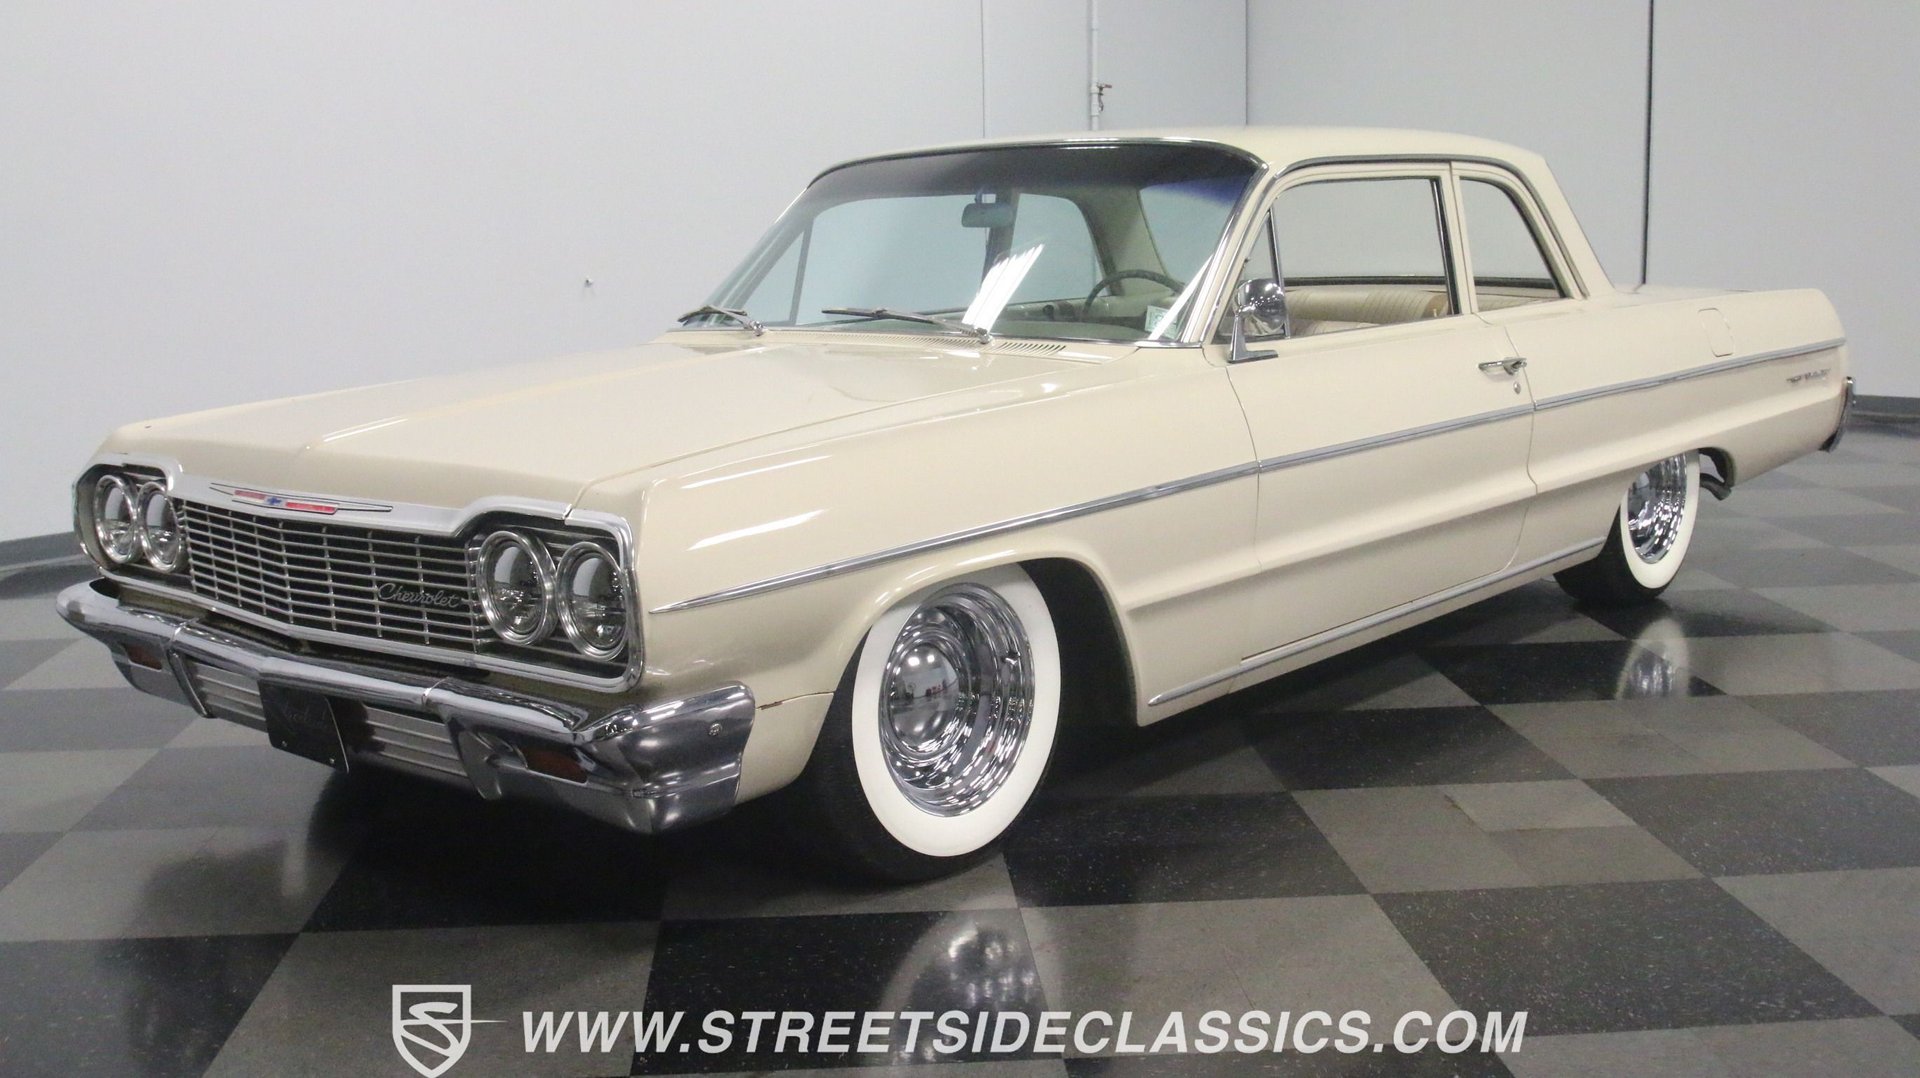 1964 Chevrolet Bel Air | Classic Cars for Sale - Streetside Classics